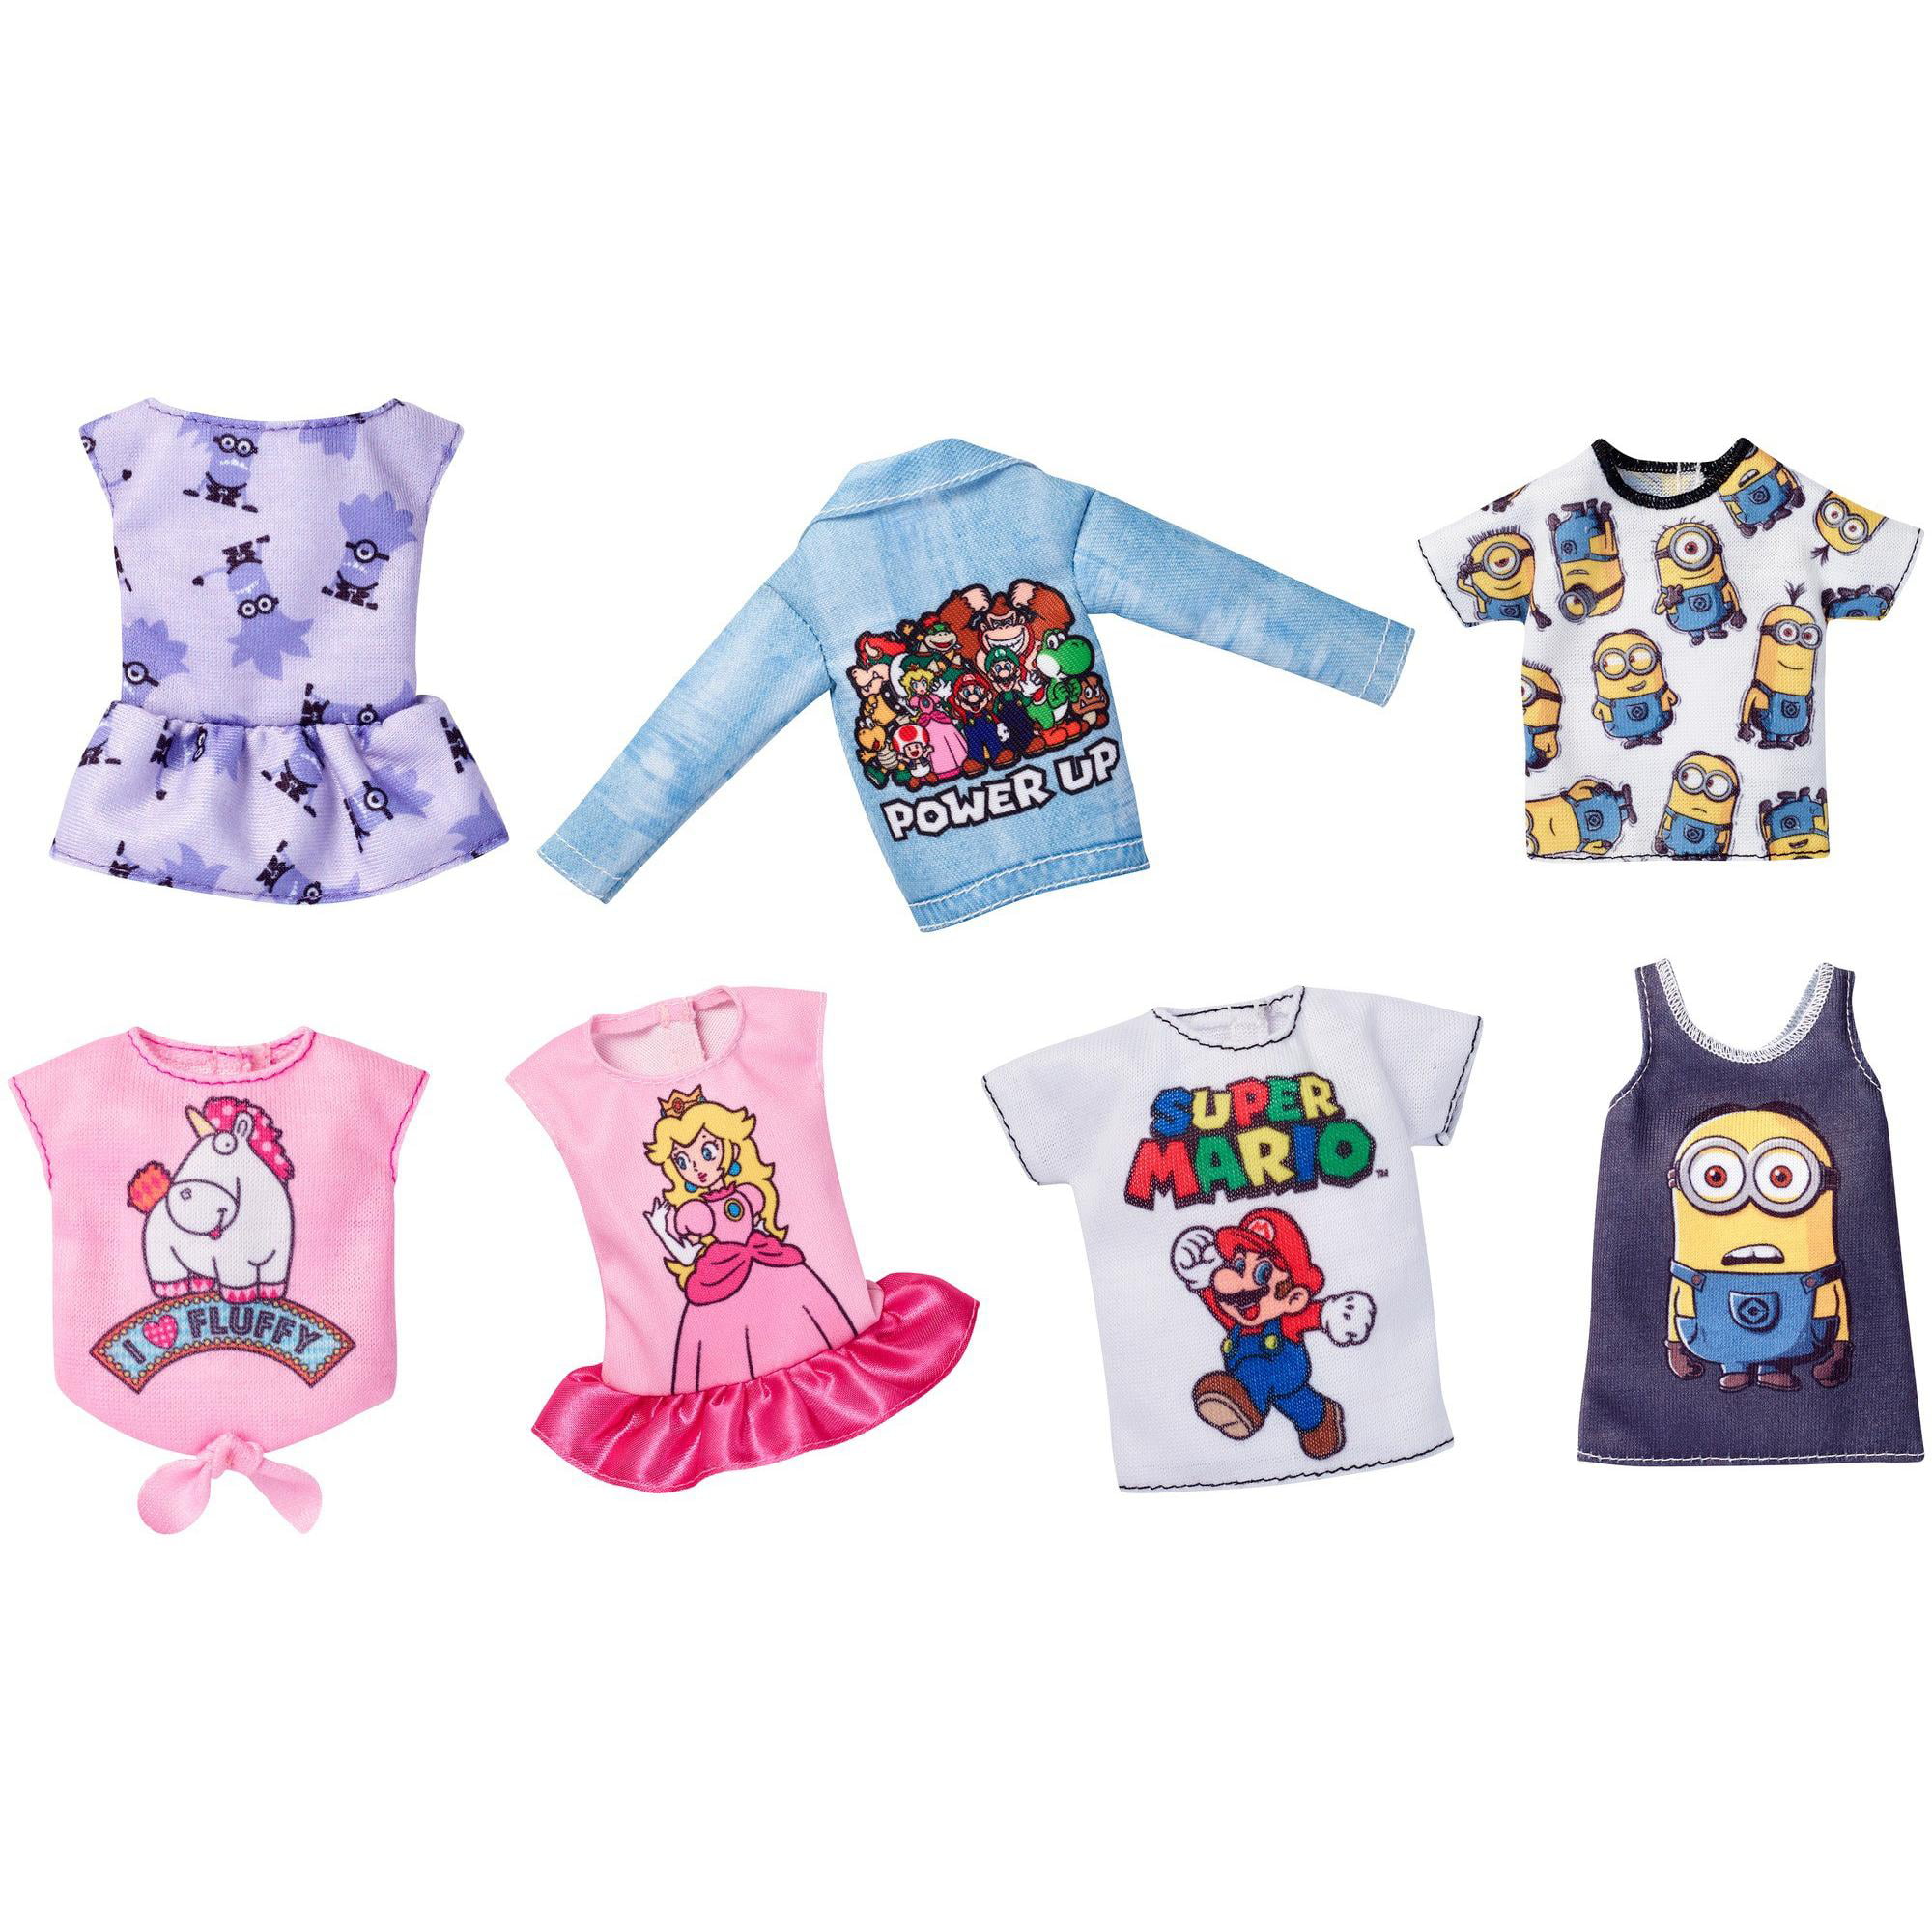 2 Barbie Spongebob Patrick Shirts Mattel Licensed Clothes Fashion for sale online 